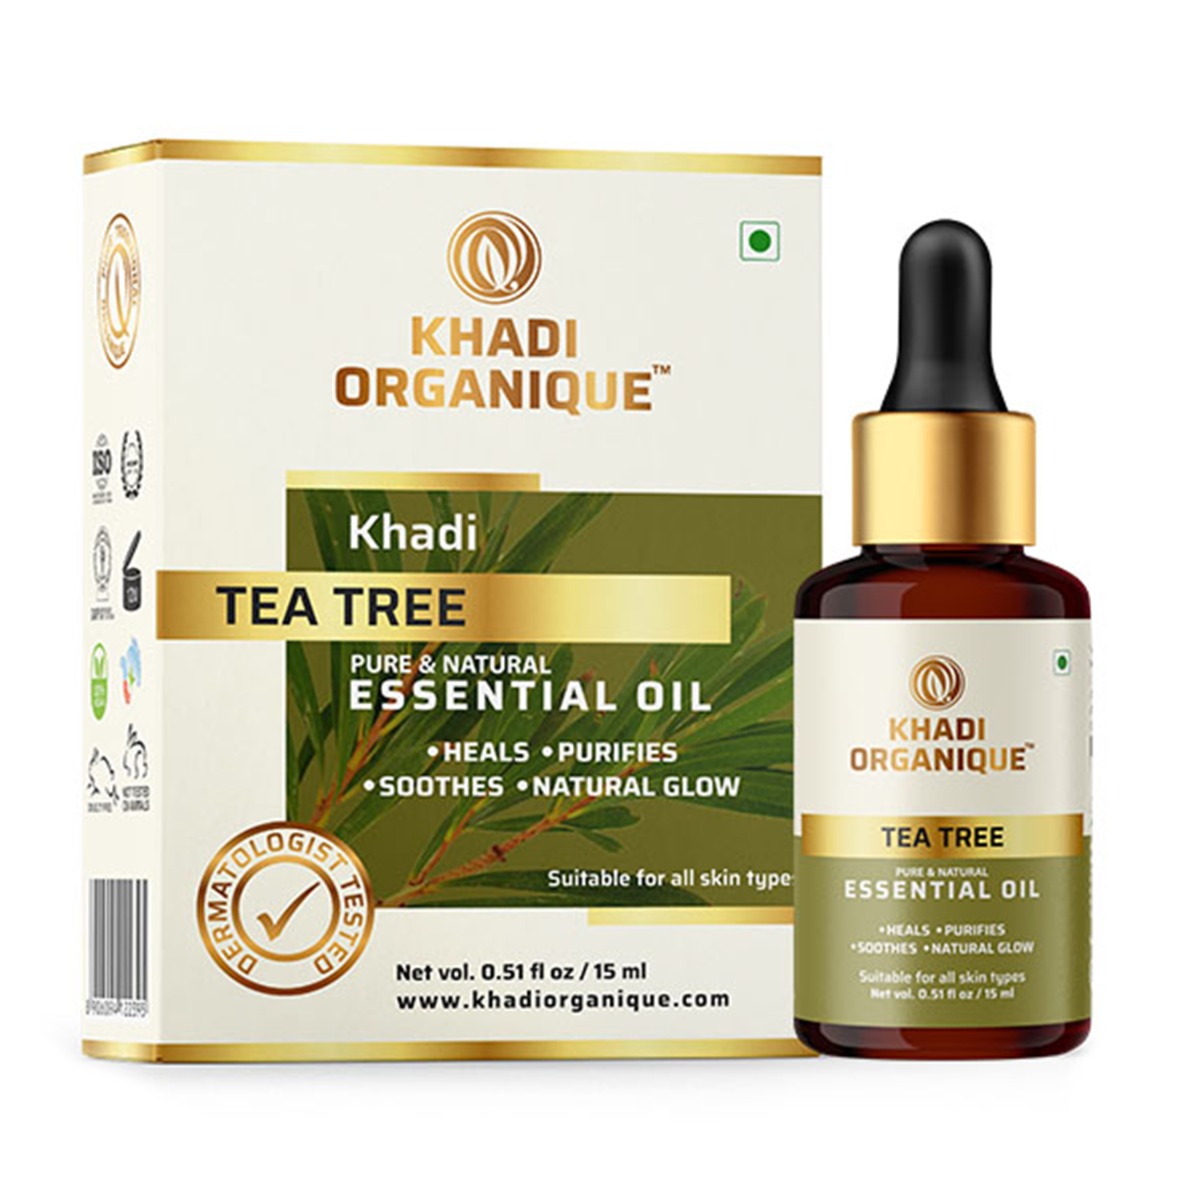 Khadi Organique Tea Tree Pure & Natural Essential Oil, 15ml